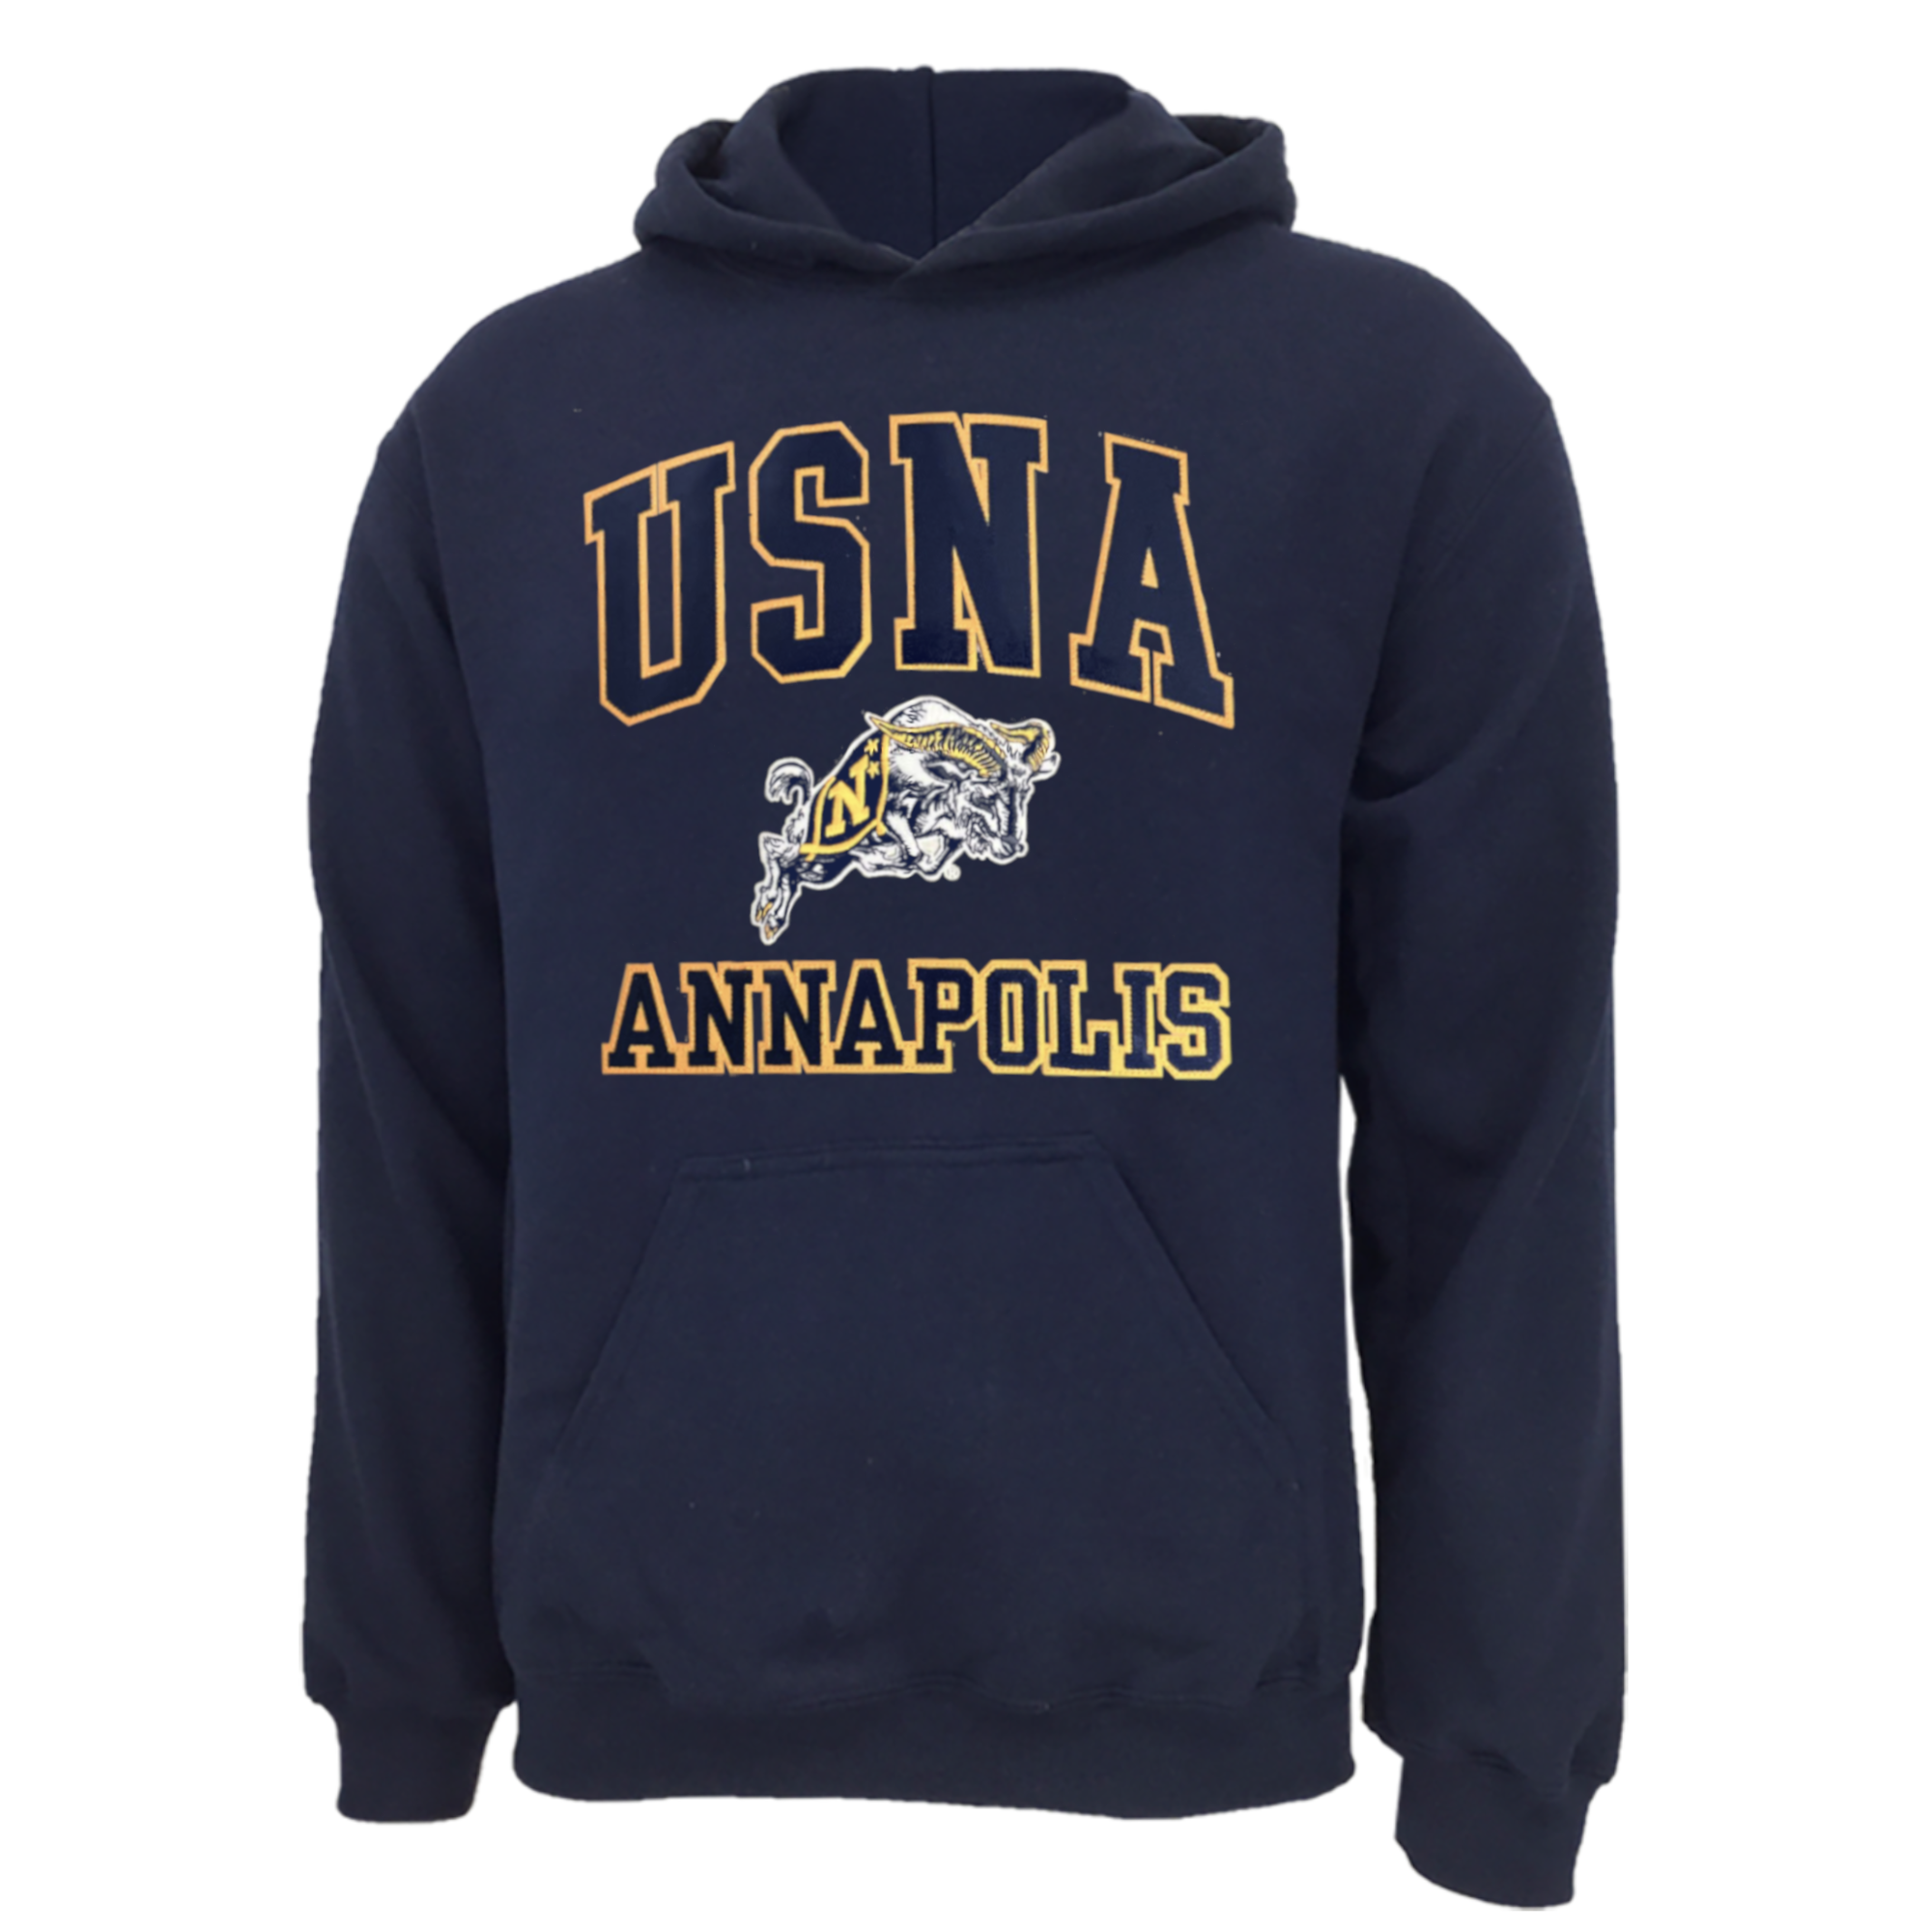 USNA Annapolis Embroidered Hood